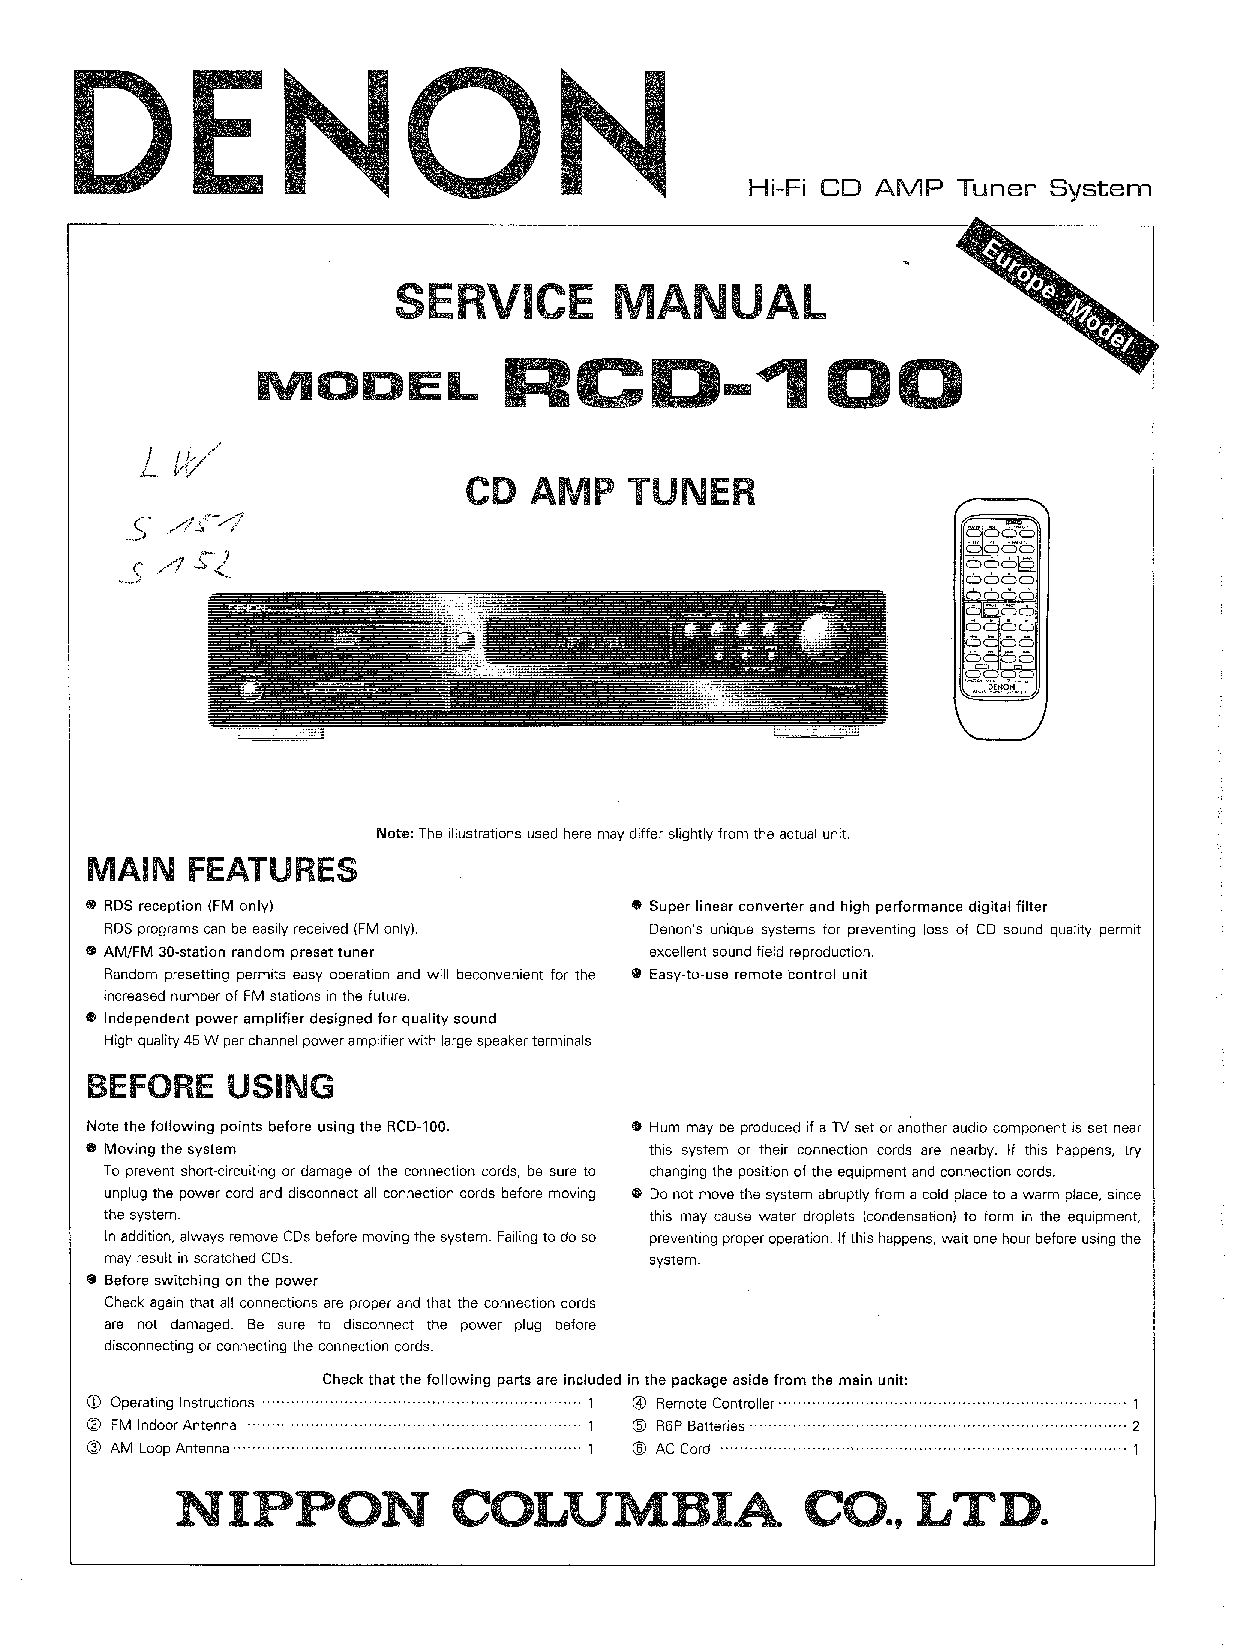 Denon RCD-100 Service Manual